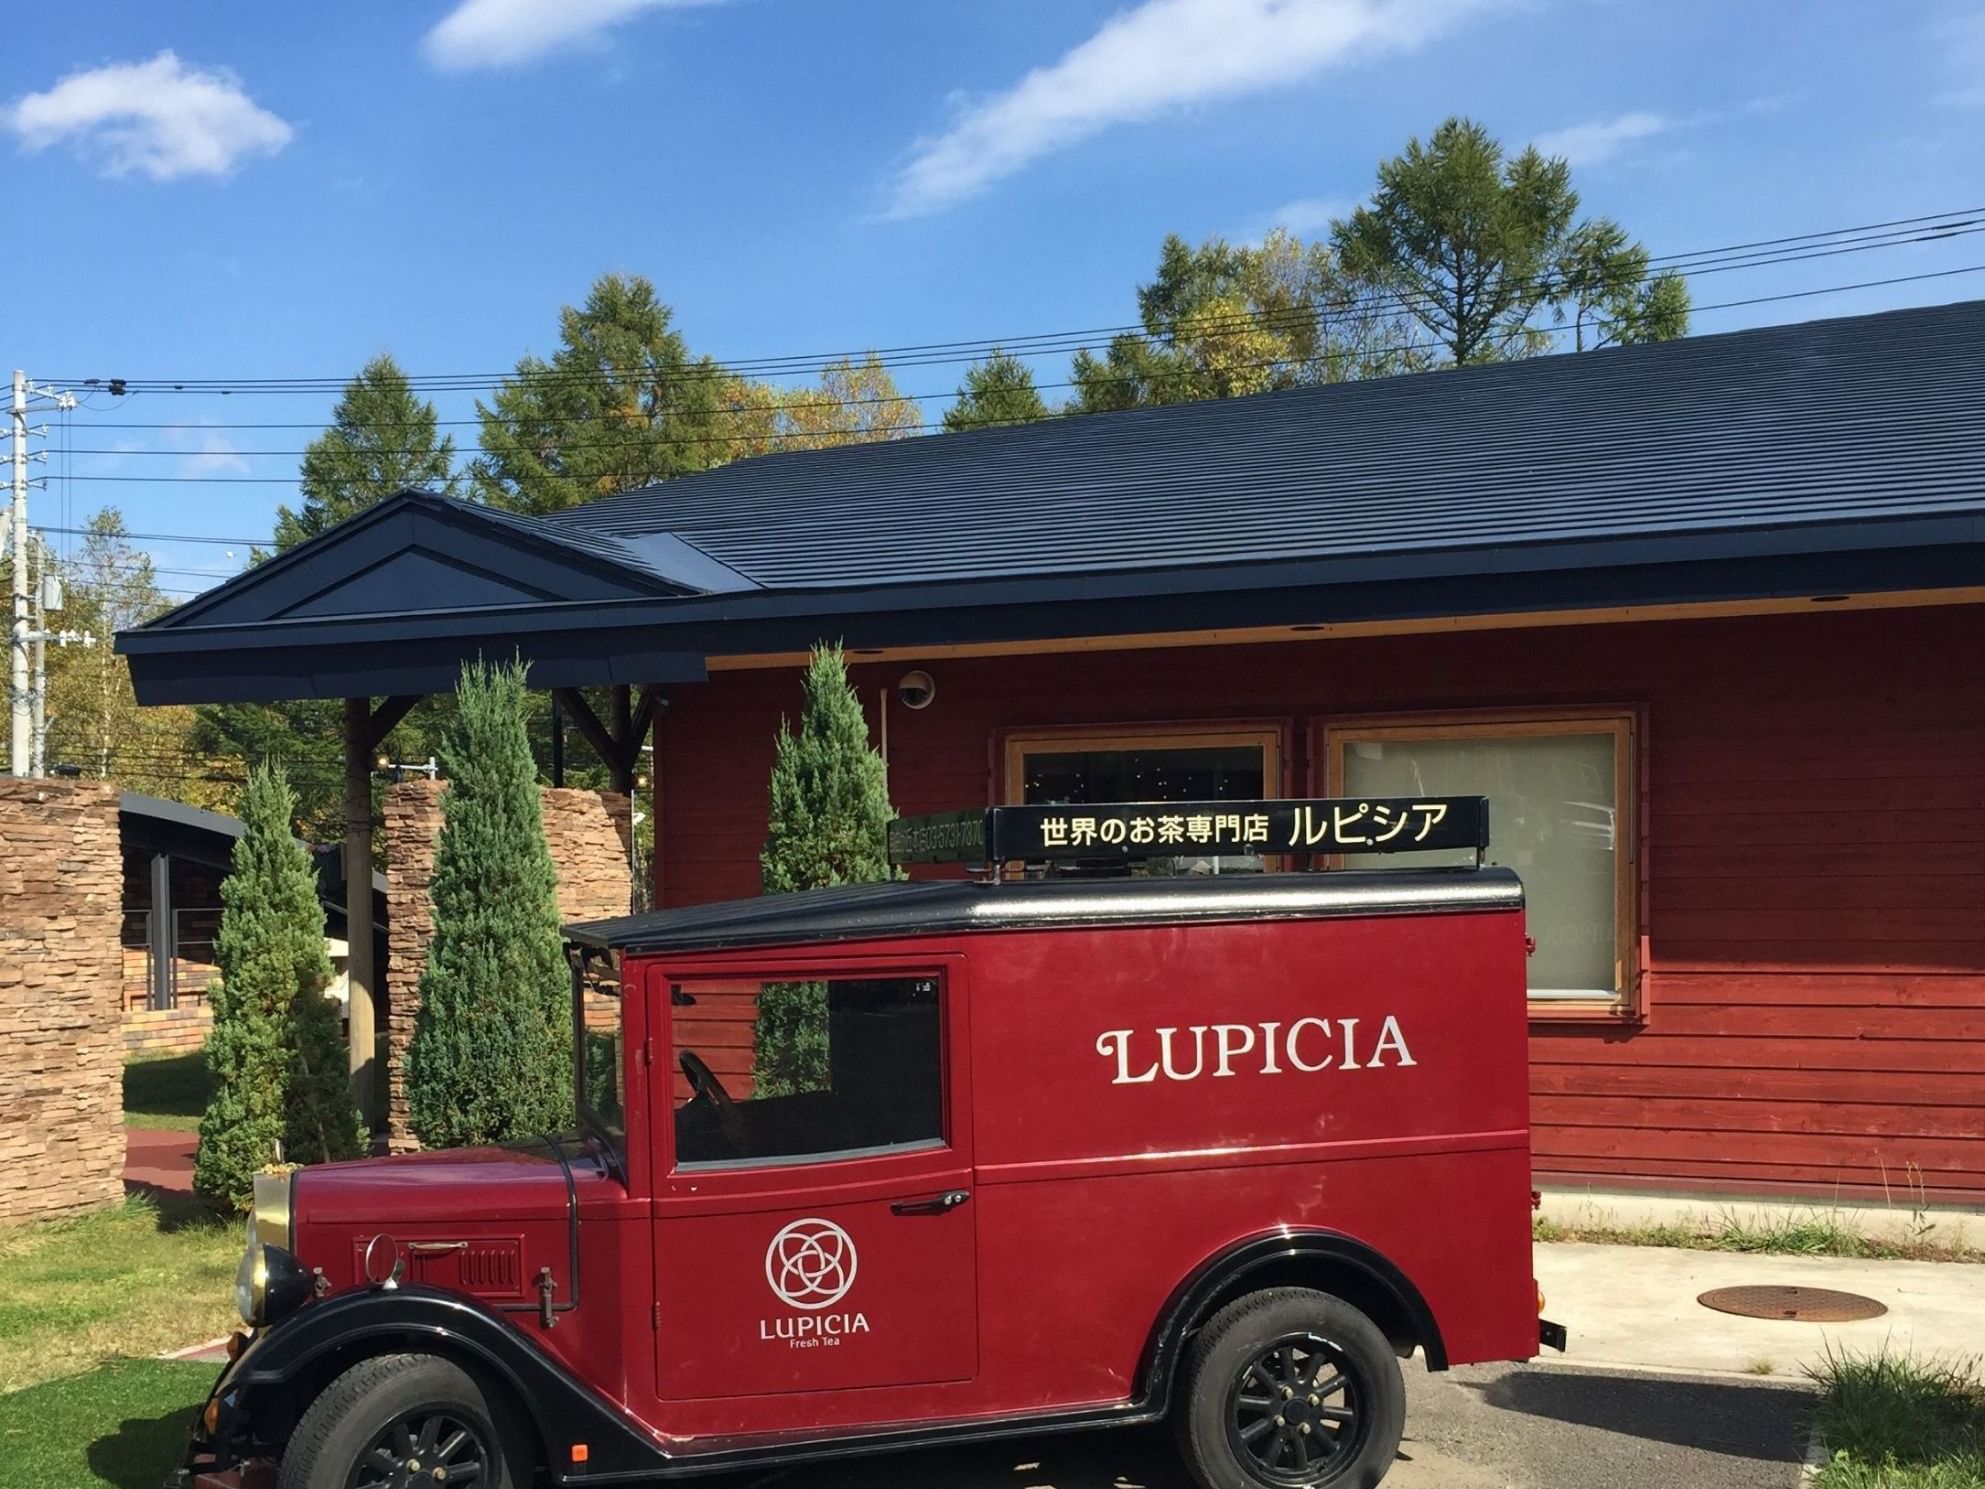 An old car in front of Lupicia Restaurant at La Villa Lupicia near Chatrium Niseko Japan